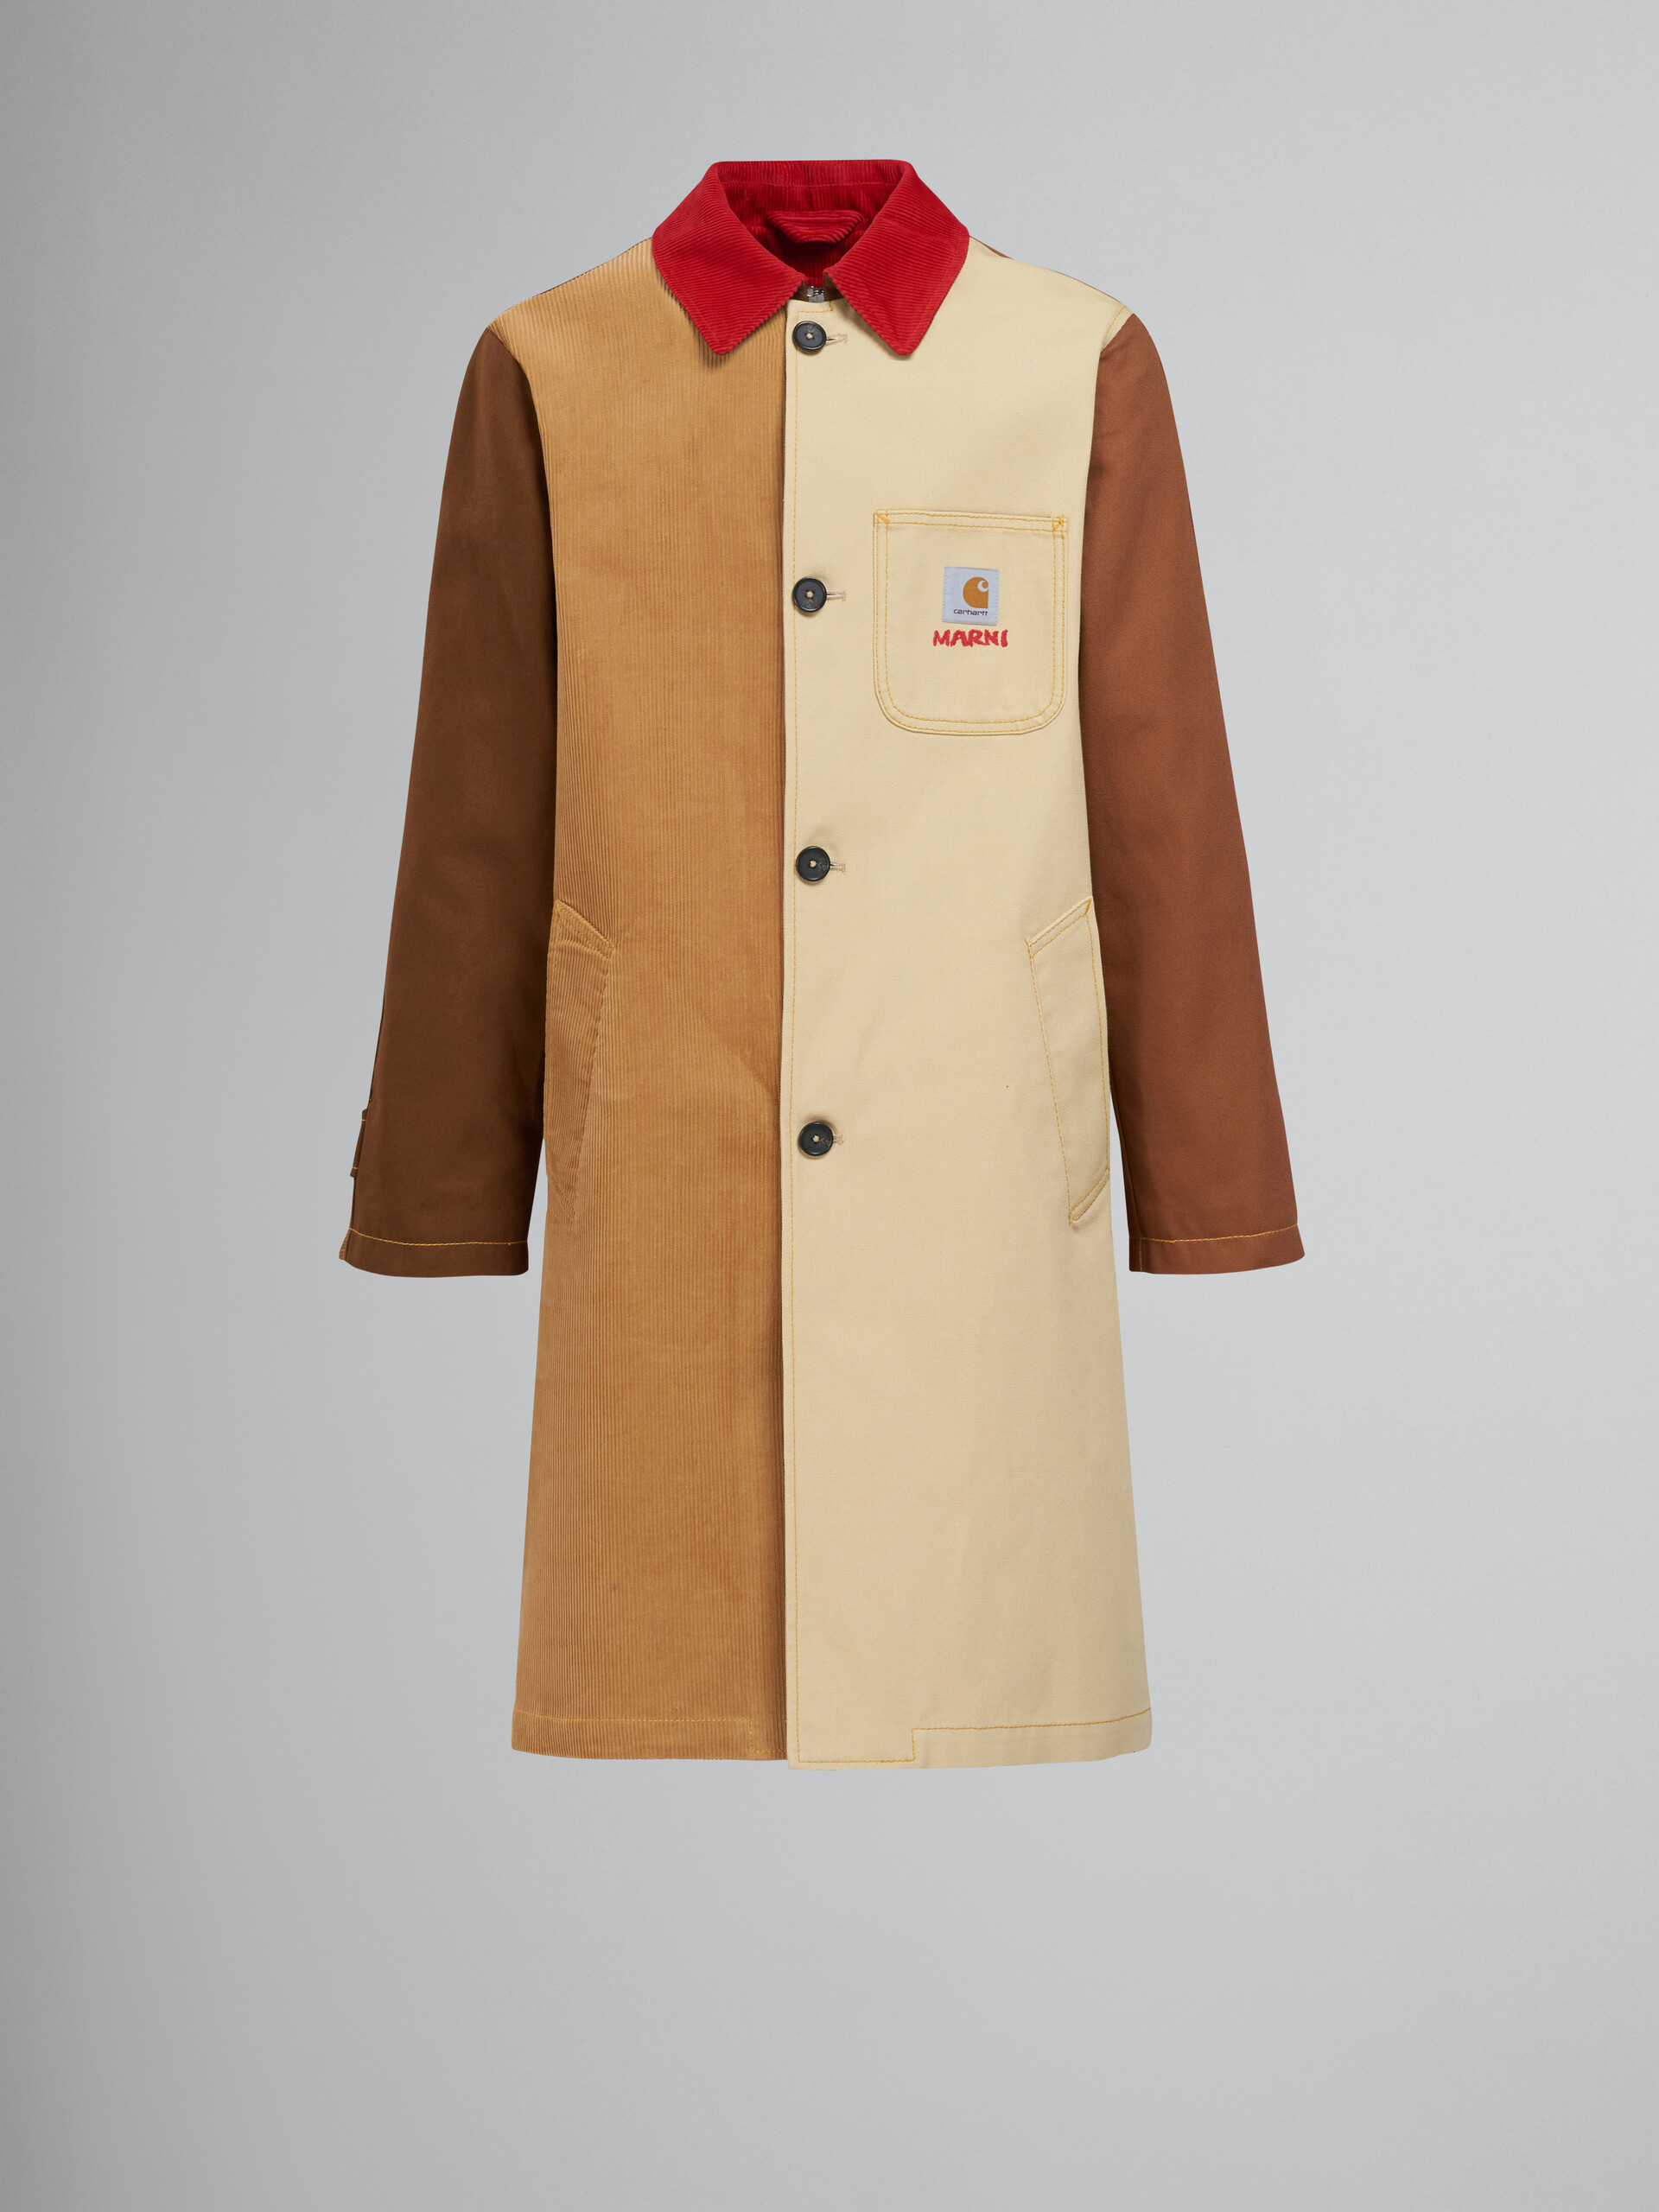 MARNI x CARHARTT WIP - brown colour-block coat